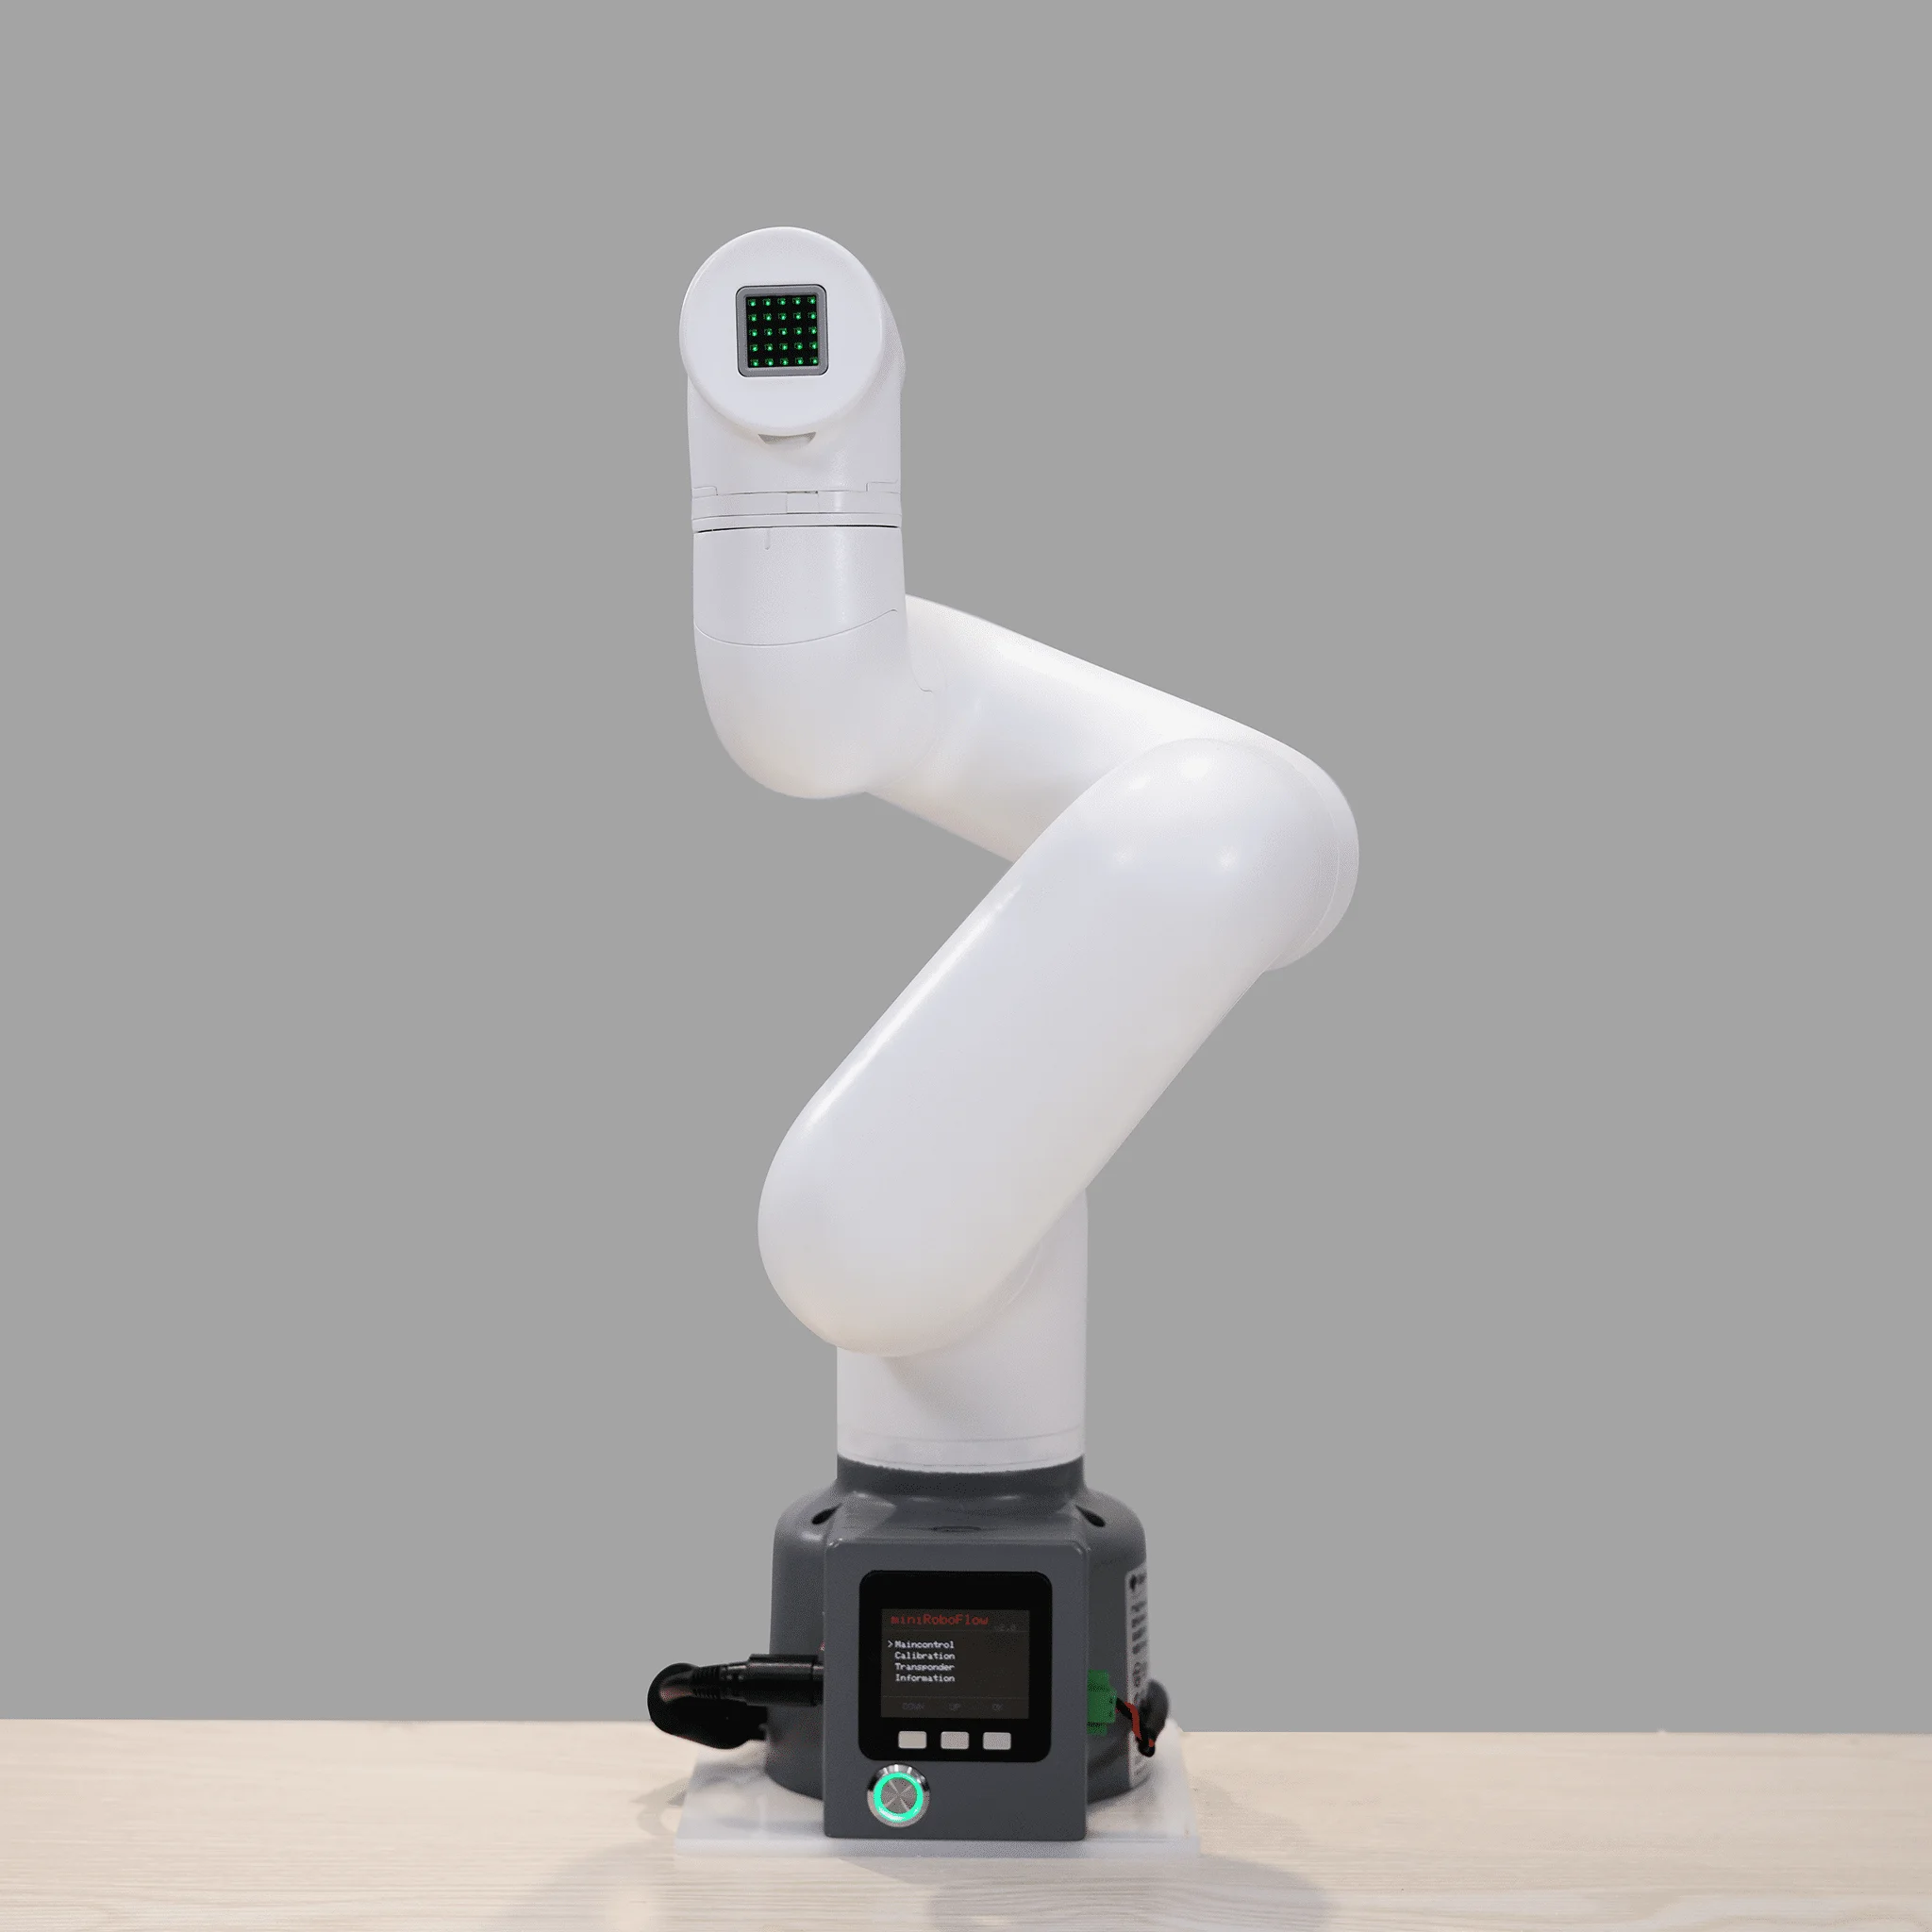 Elephant Robotics myrobot 320 M5-2022 1KG carico utile Robot collaborativo braccio robotico Desktop braccio robotico commerciale 6 Dof